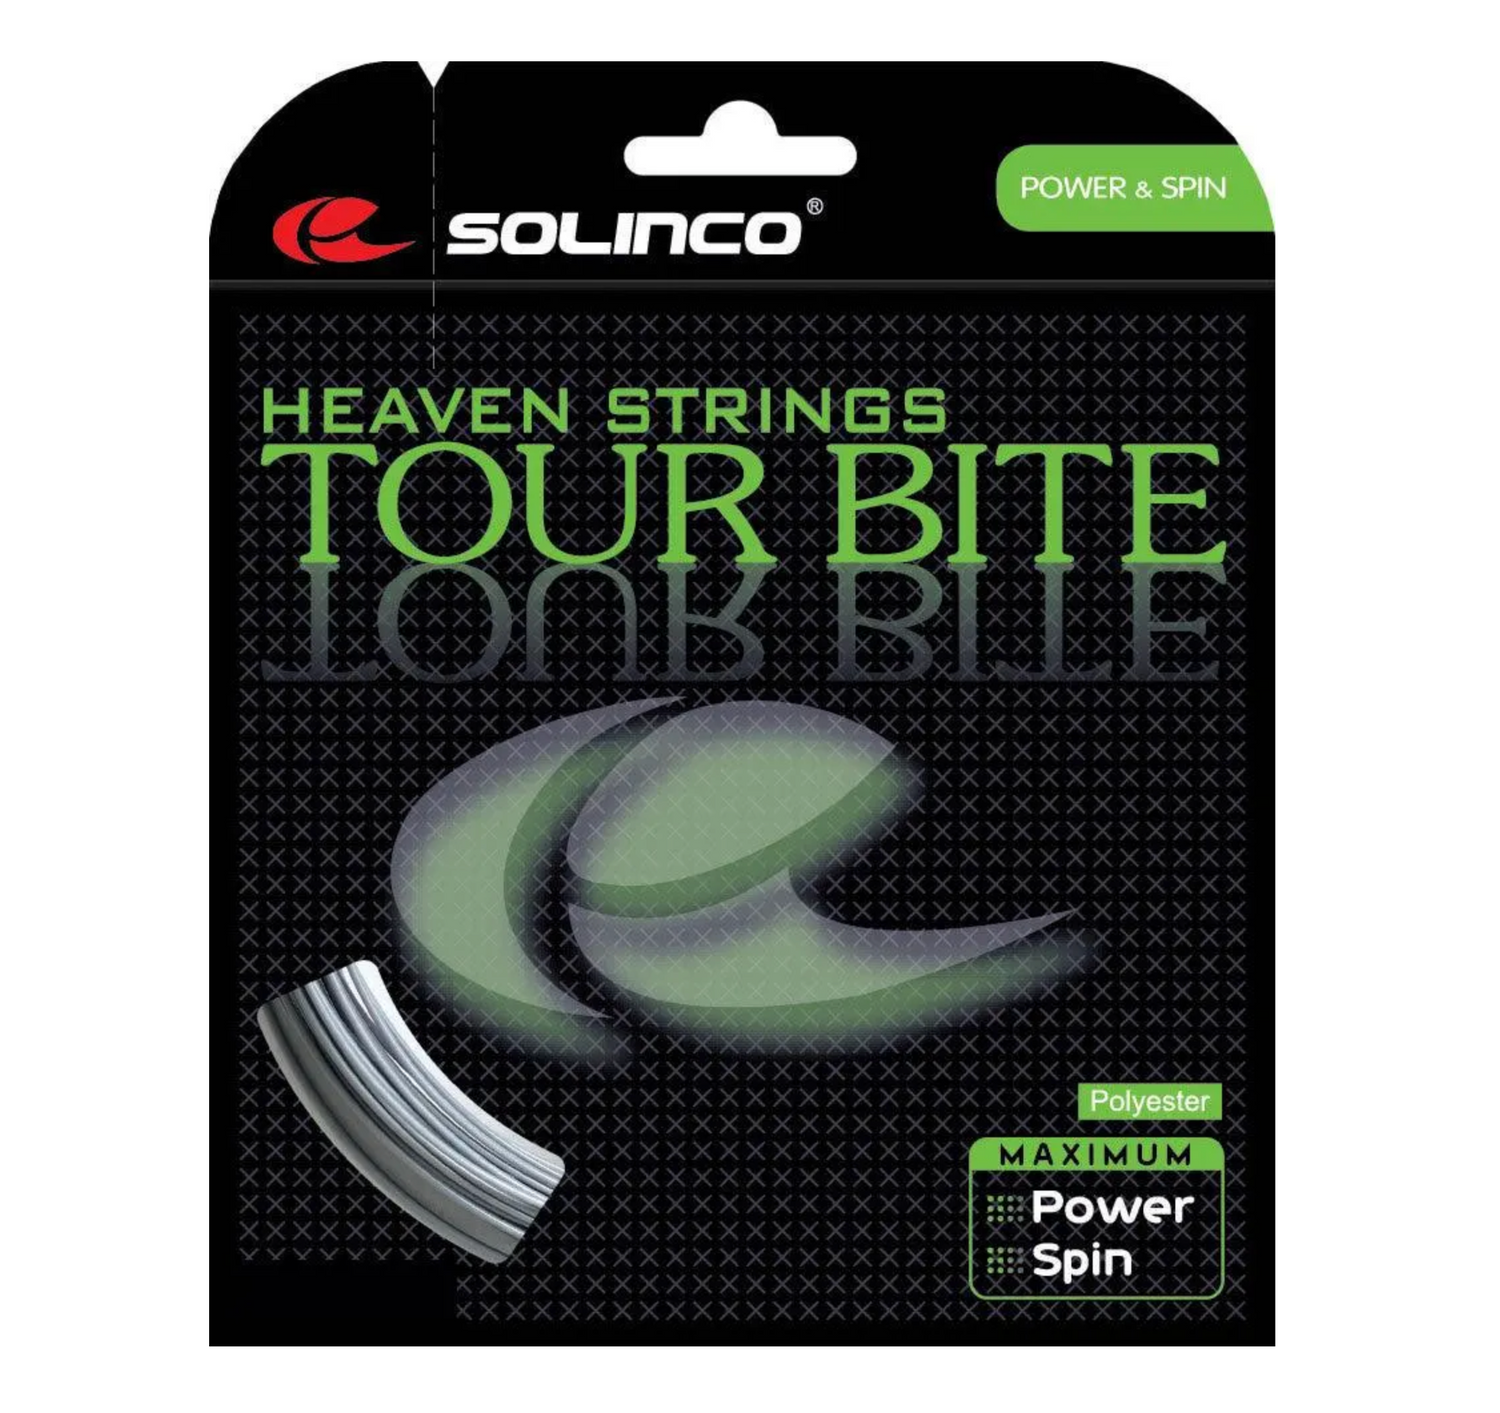 Solinco Tour Bite 17 Tennis String Set in original package